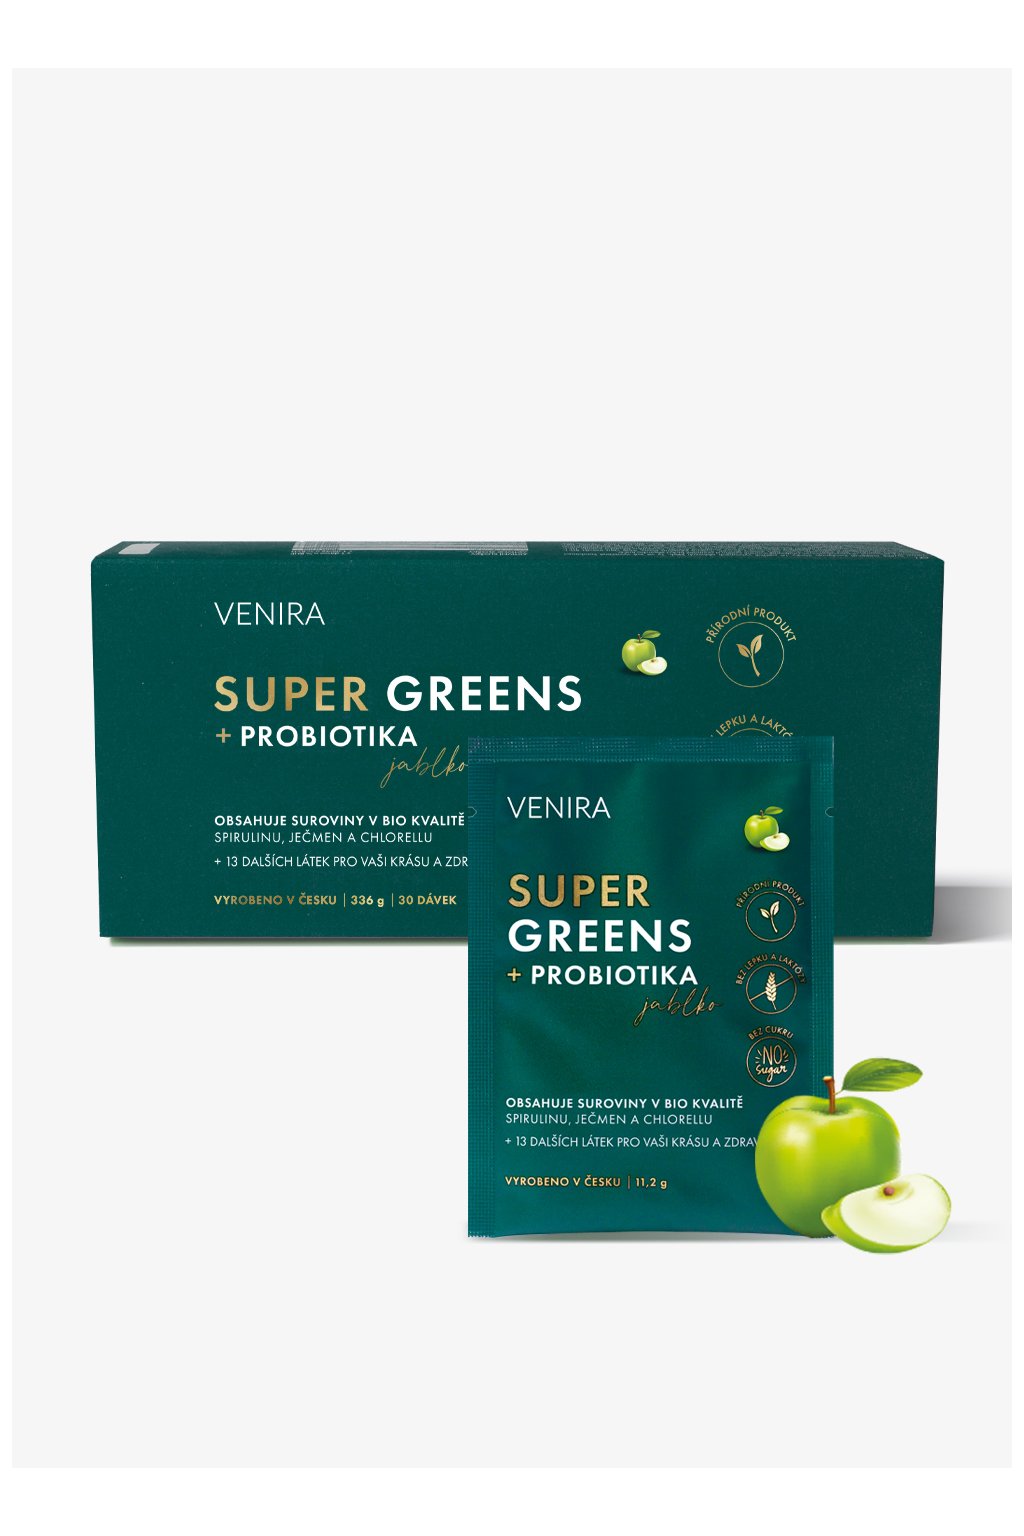 Super greens + probiotika